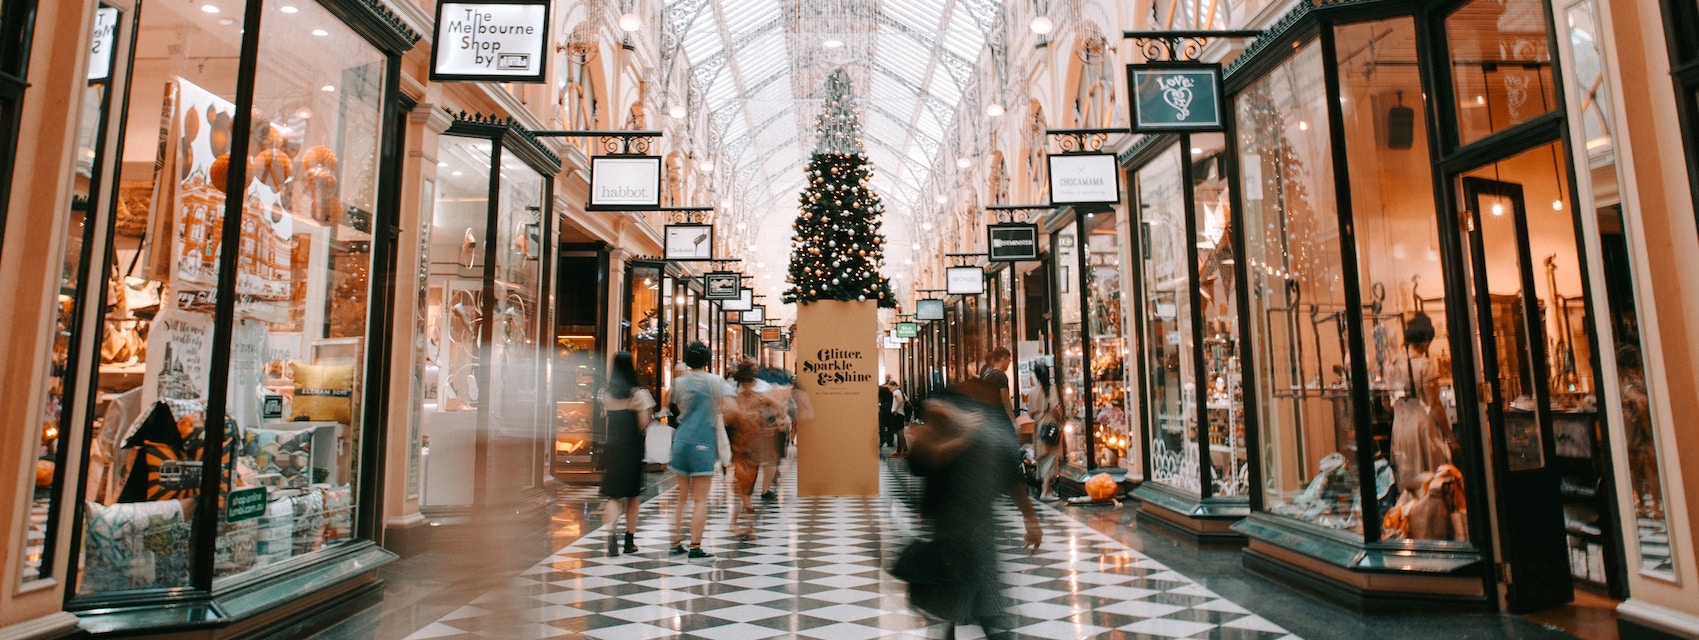 Monthly Retail Round-Up - December 2018